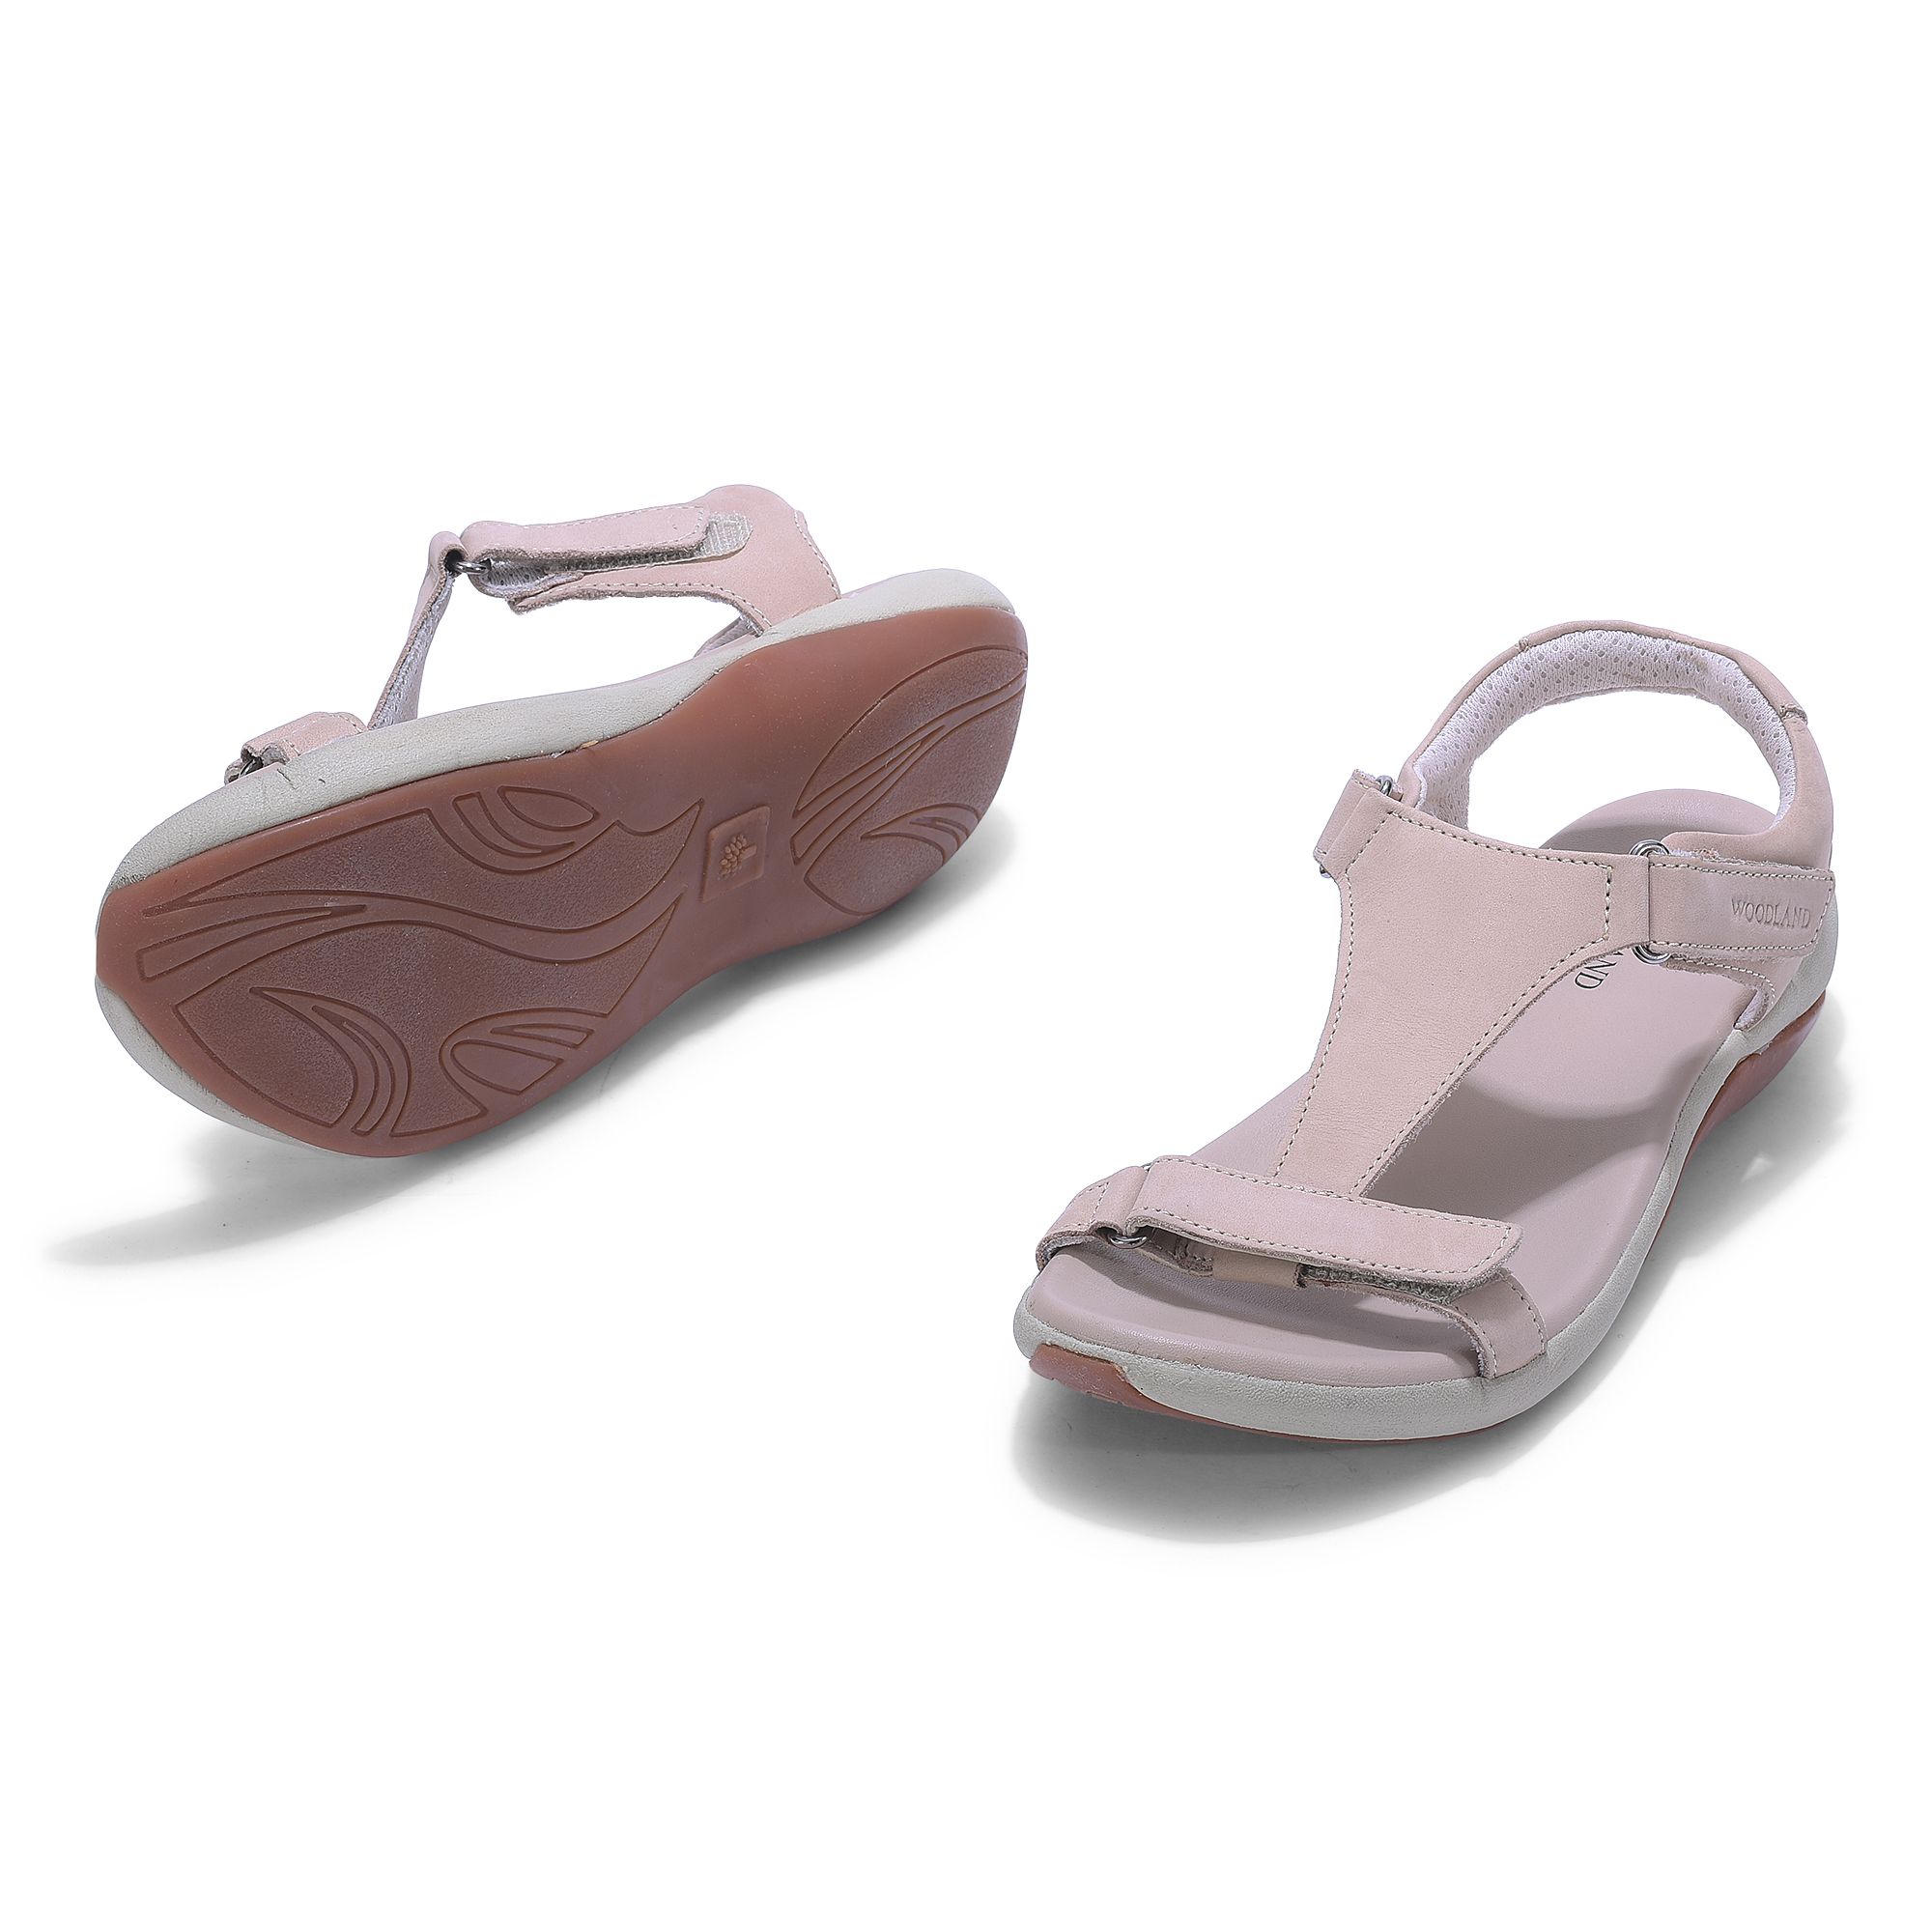 New Balance Flop Sandals for Women | Mercari-hkpdtq2012.edu.vn